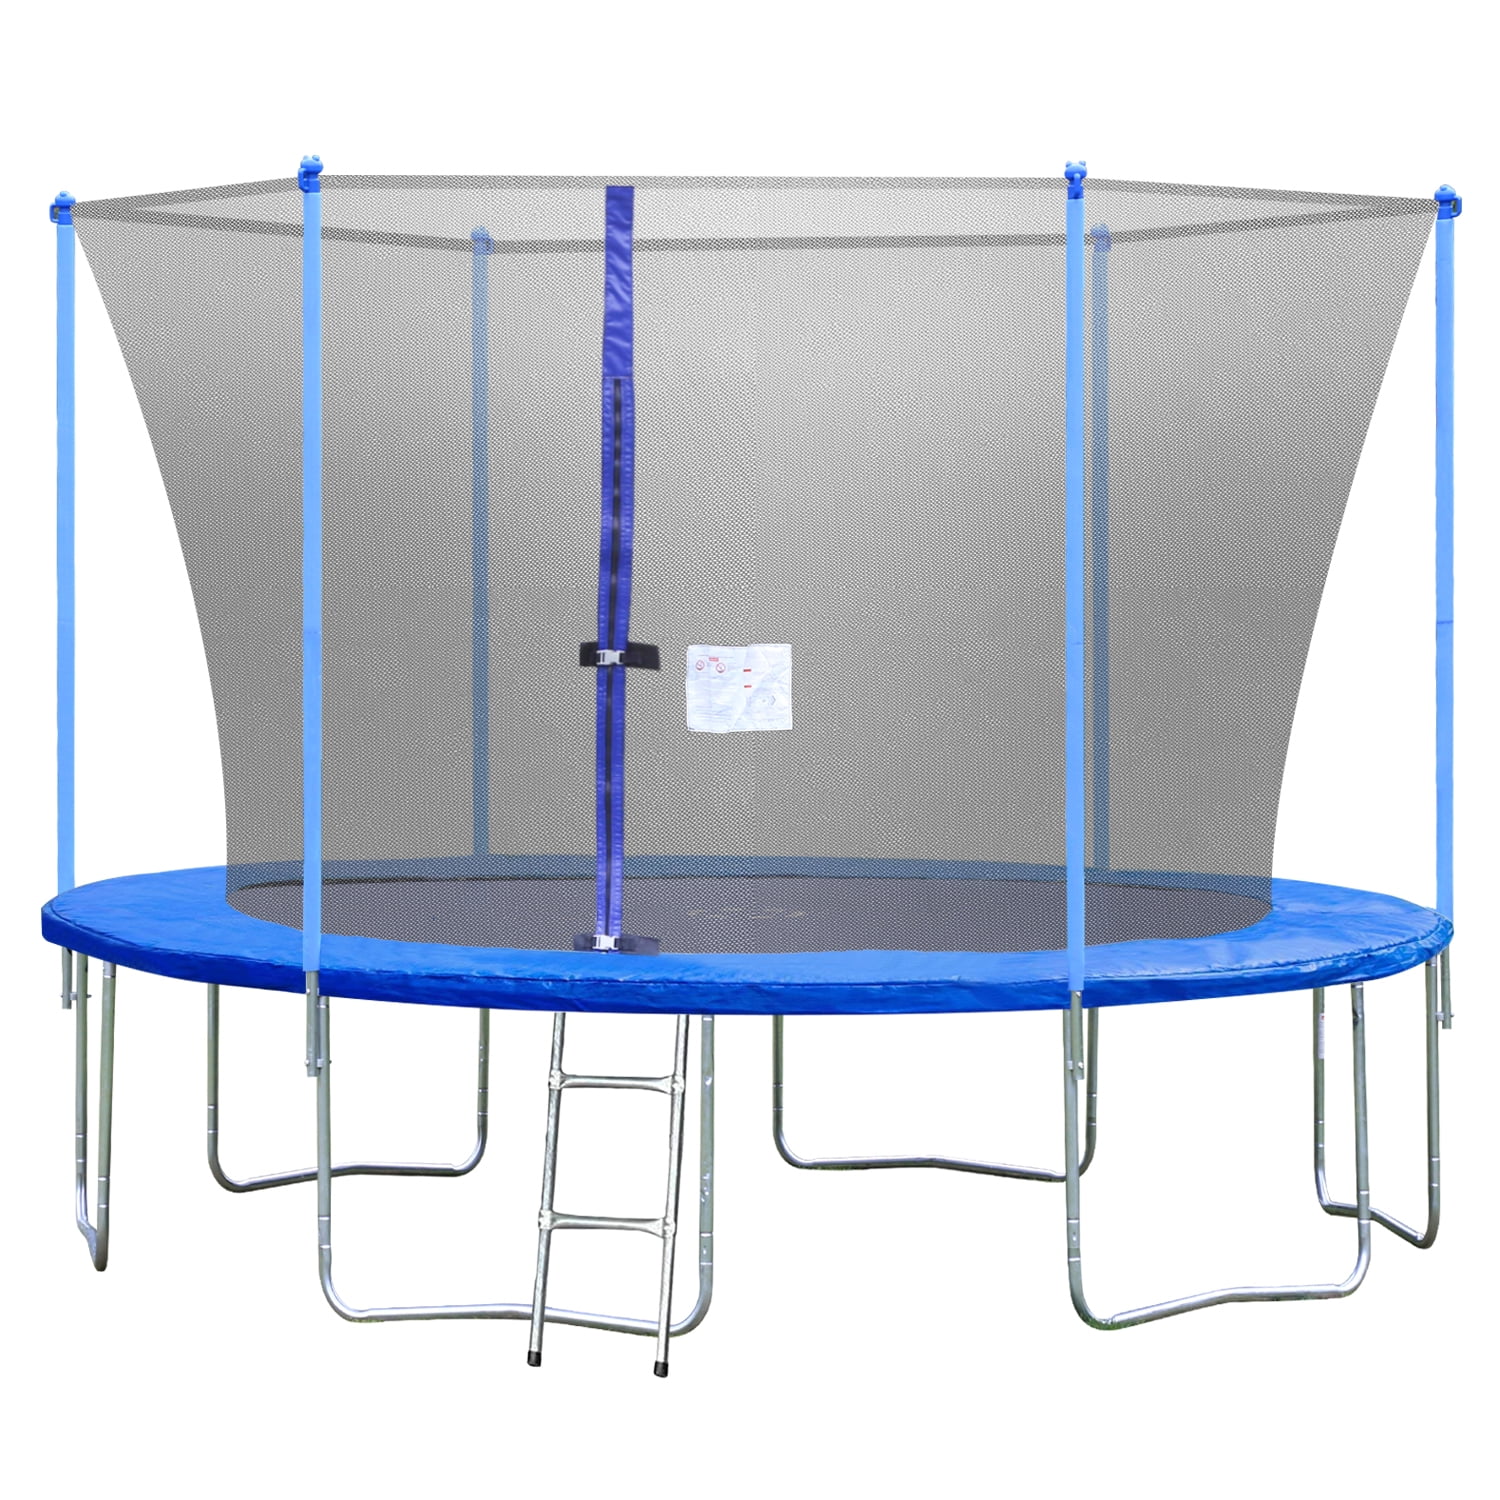 14ft folding trampoline